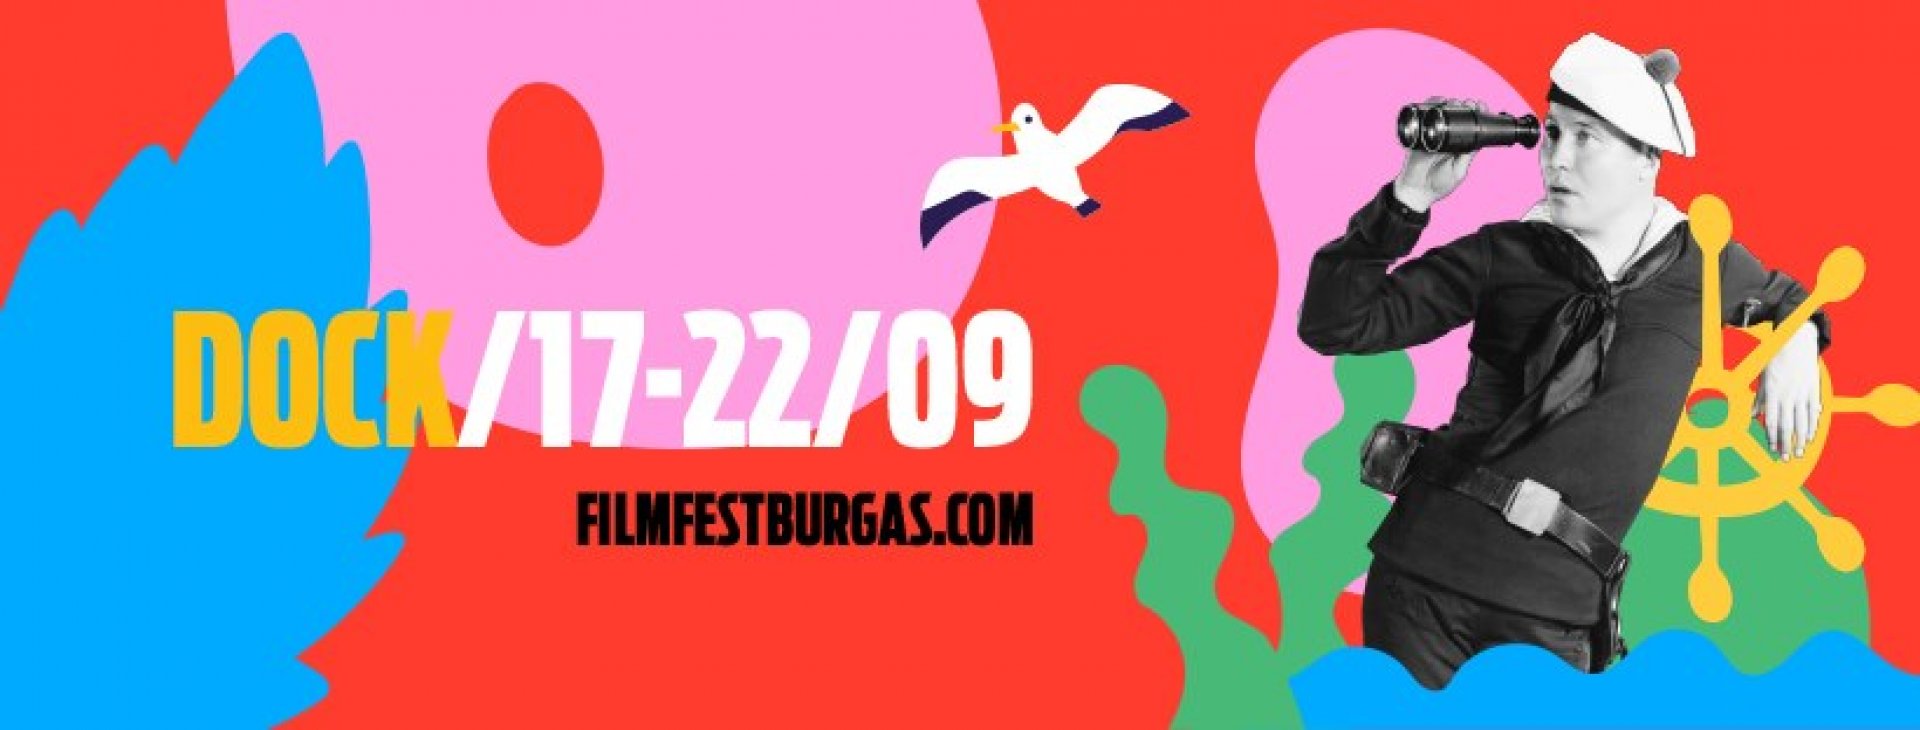 Международния фестивал на документалния исторически филм DOCK 2019  - E-Burgas.com